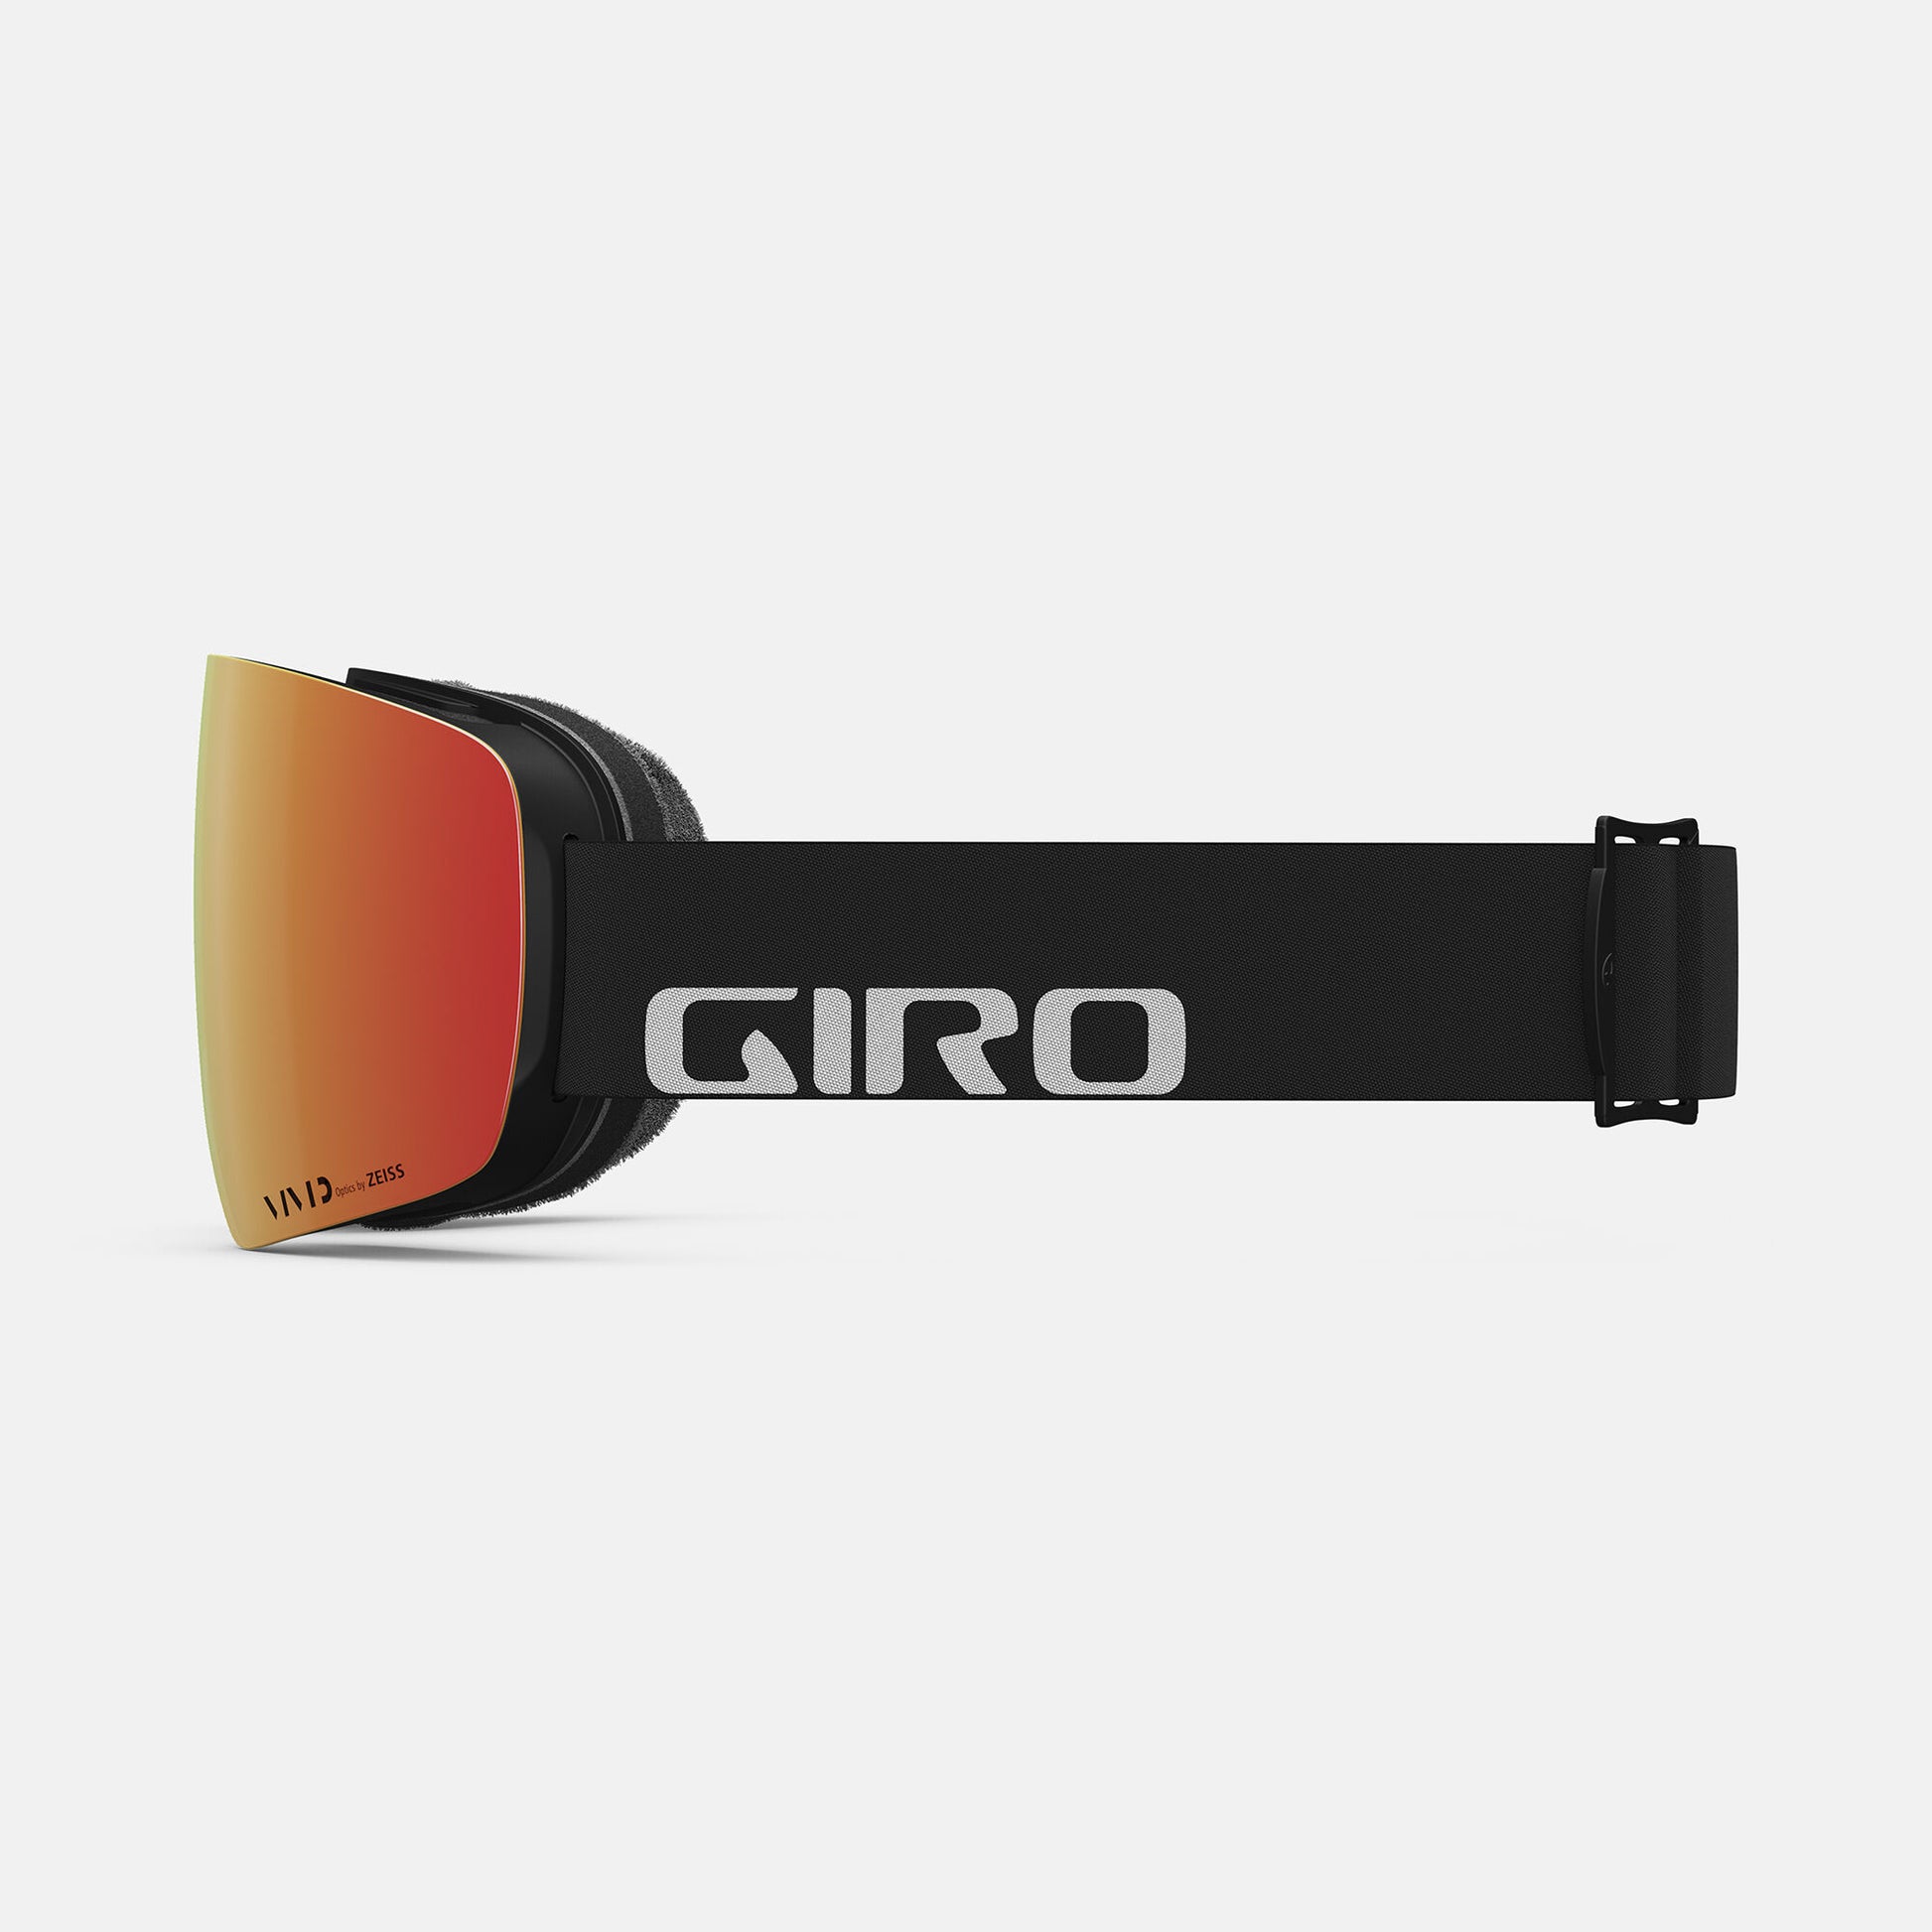 Giro Women's Contour RS Snow Goggles Black Wordmark / Vivid Ember Snow Goggles